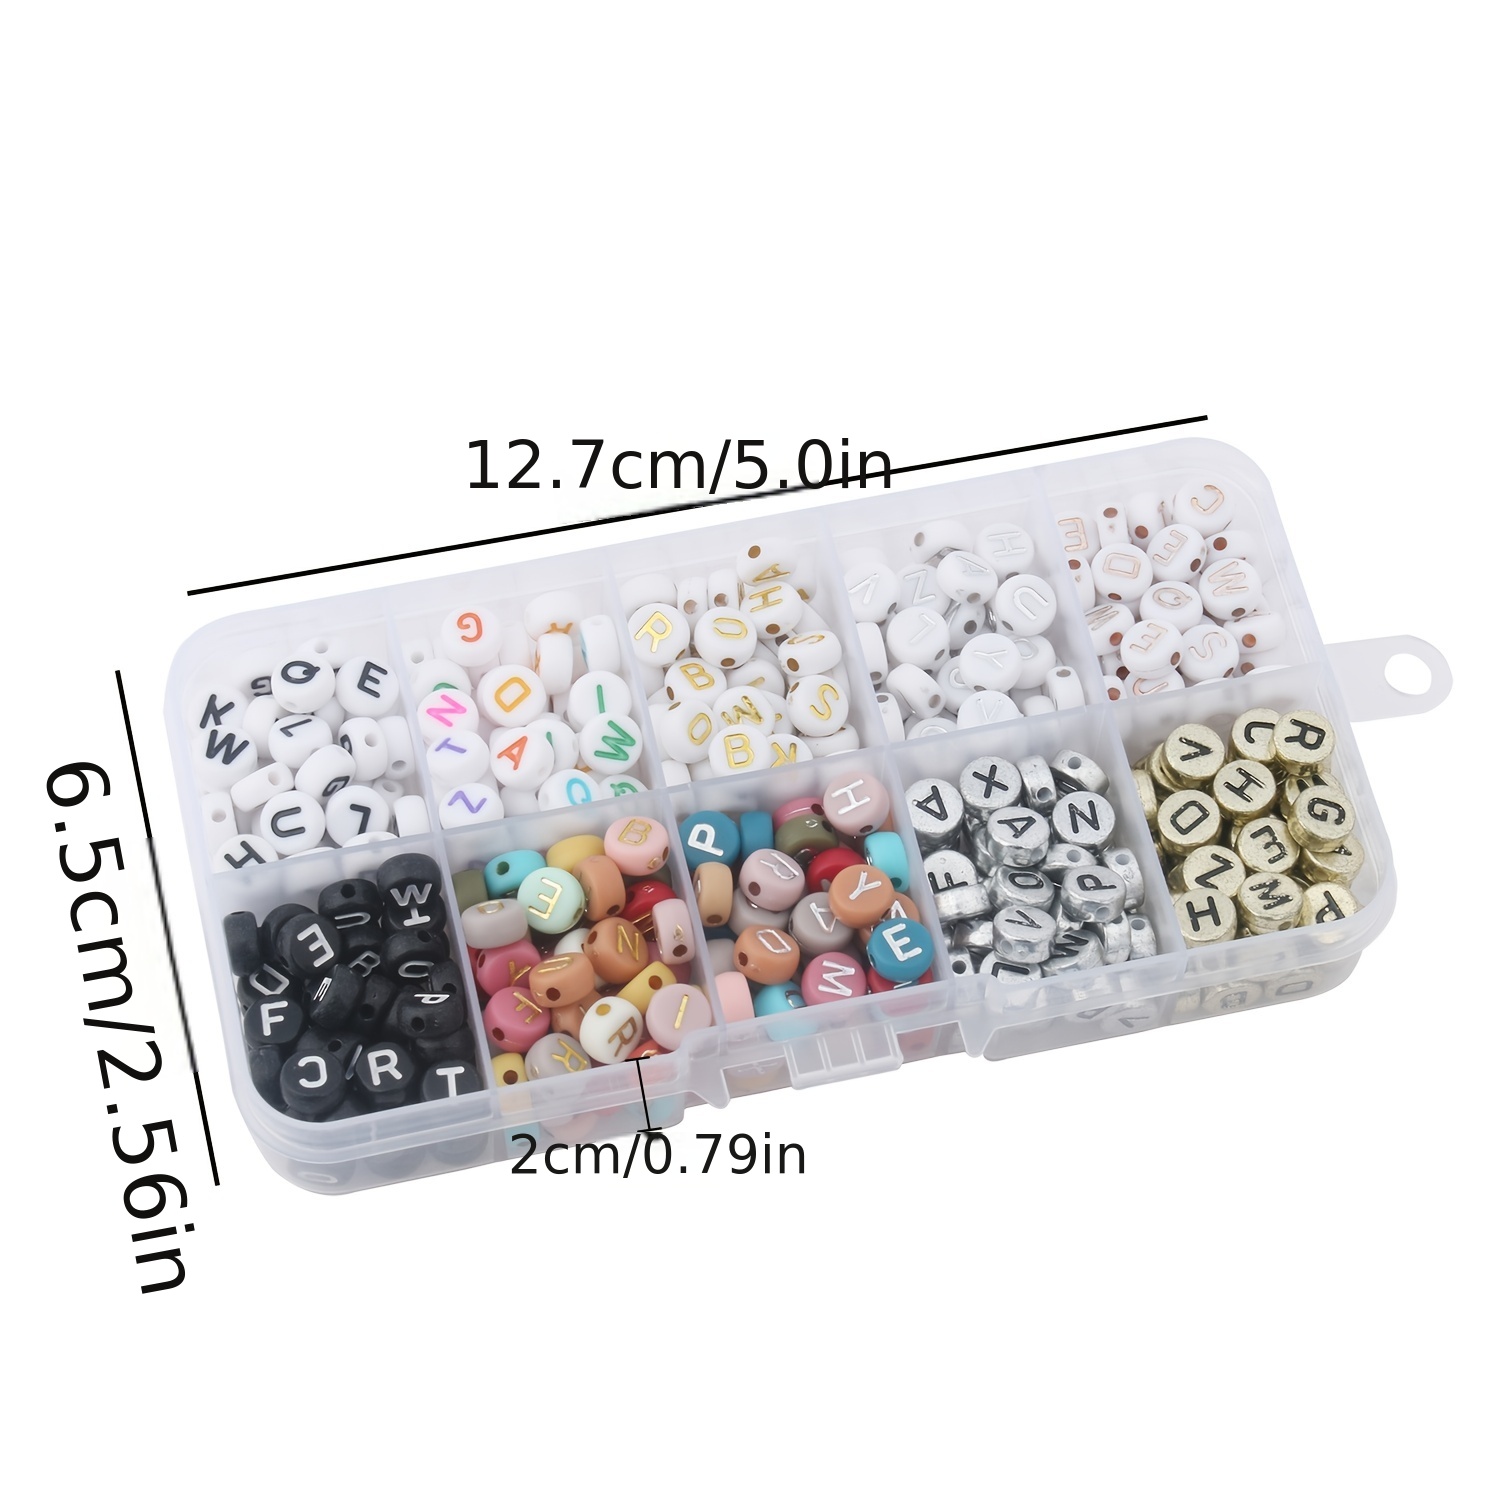  Cousin DIY Square Acrylic Plastic 6mm Alphabet Beads